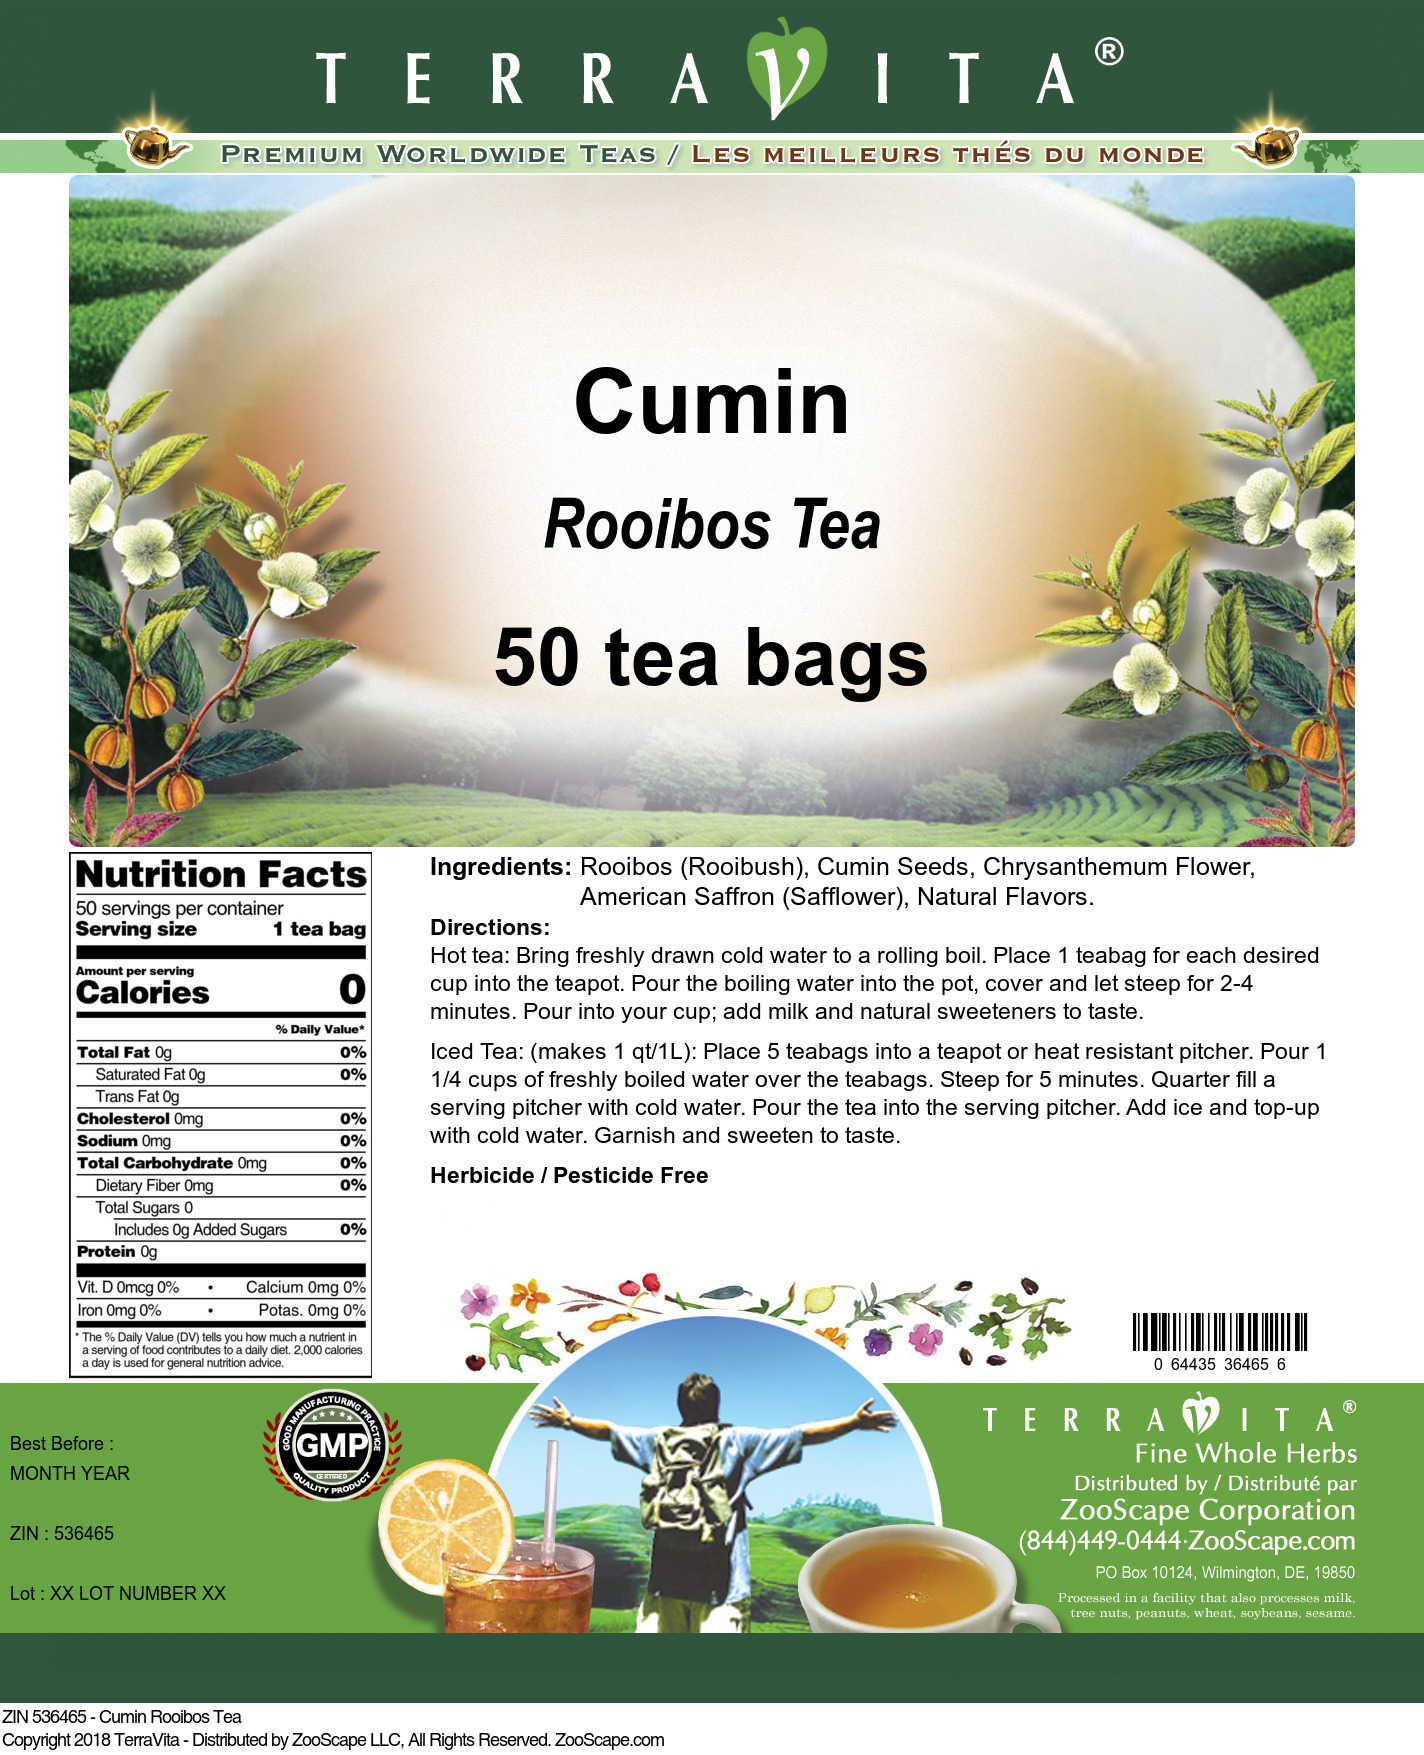 Cumin Rooibos Tea - Label